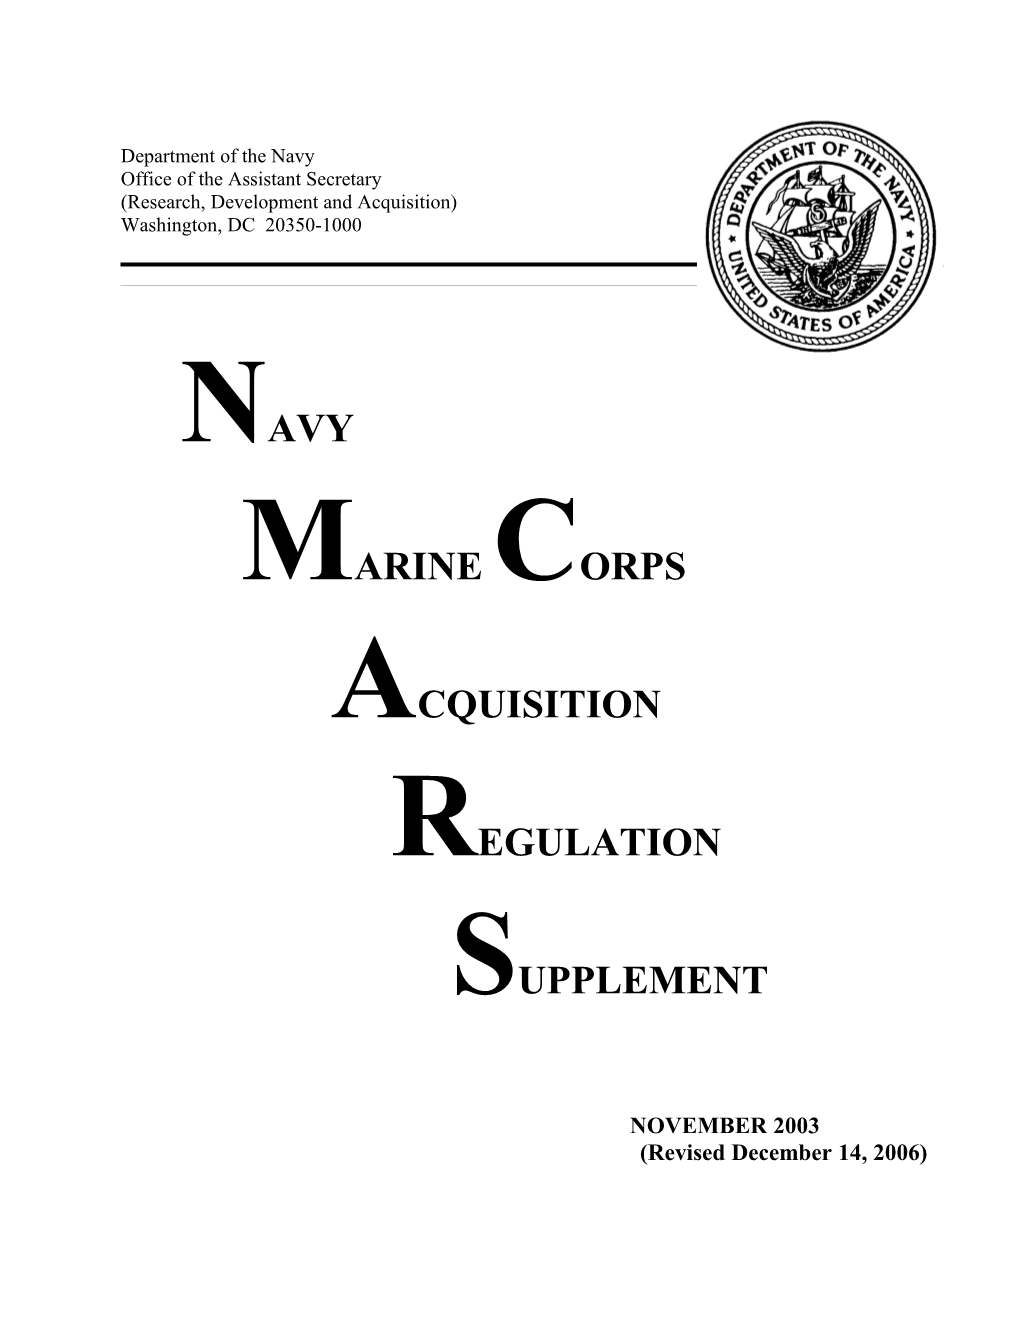 Navy Marine Corps Acquisition Regulation Supplement